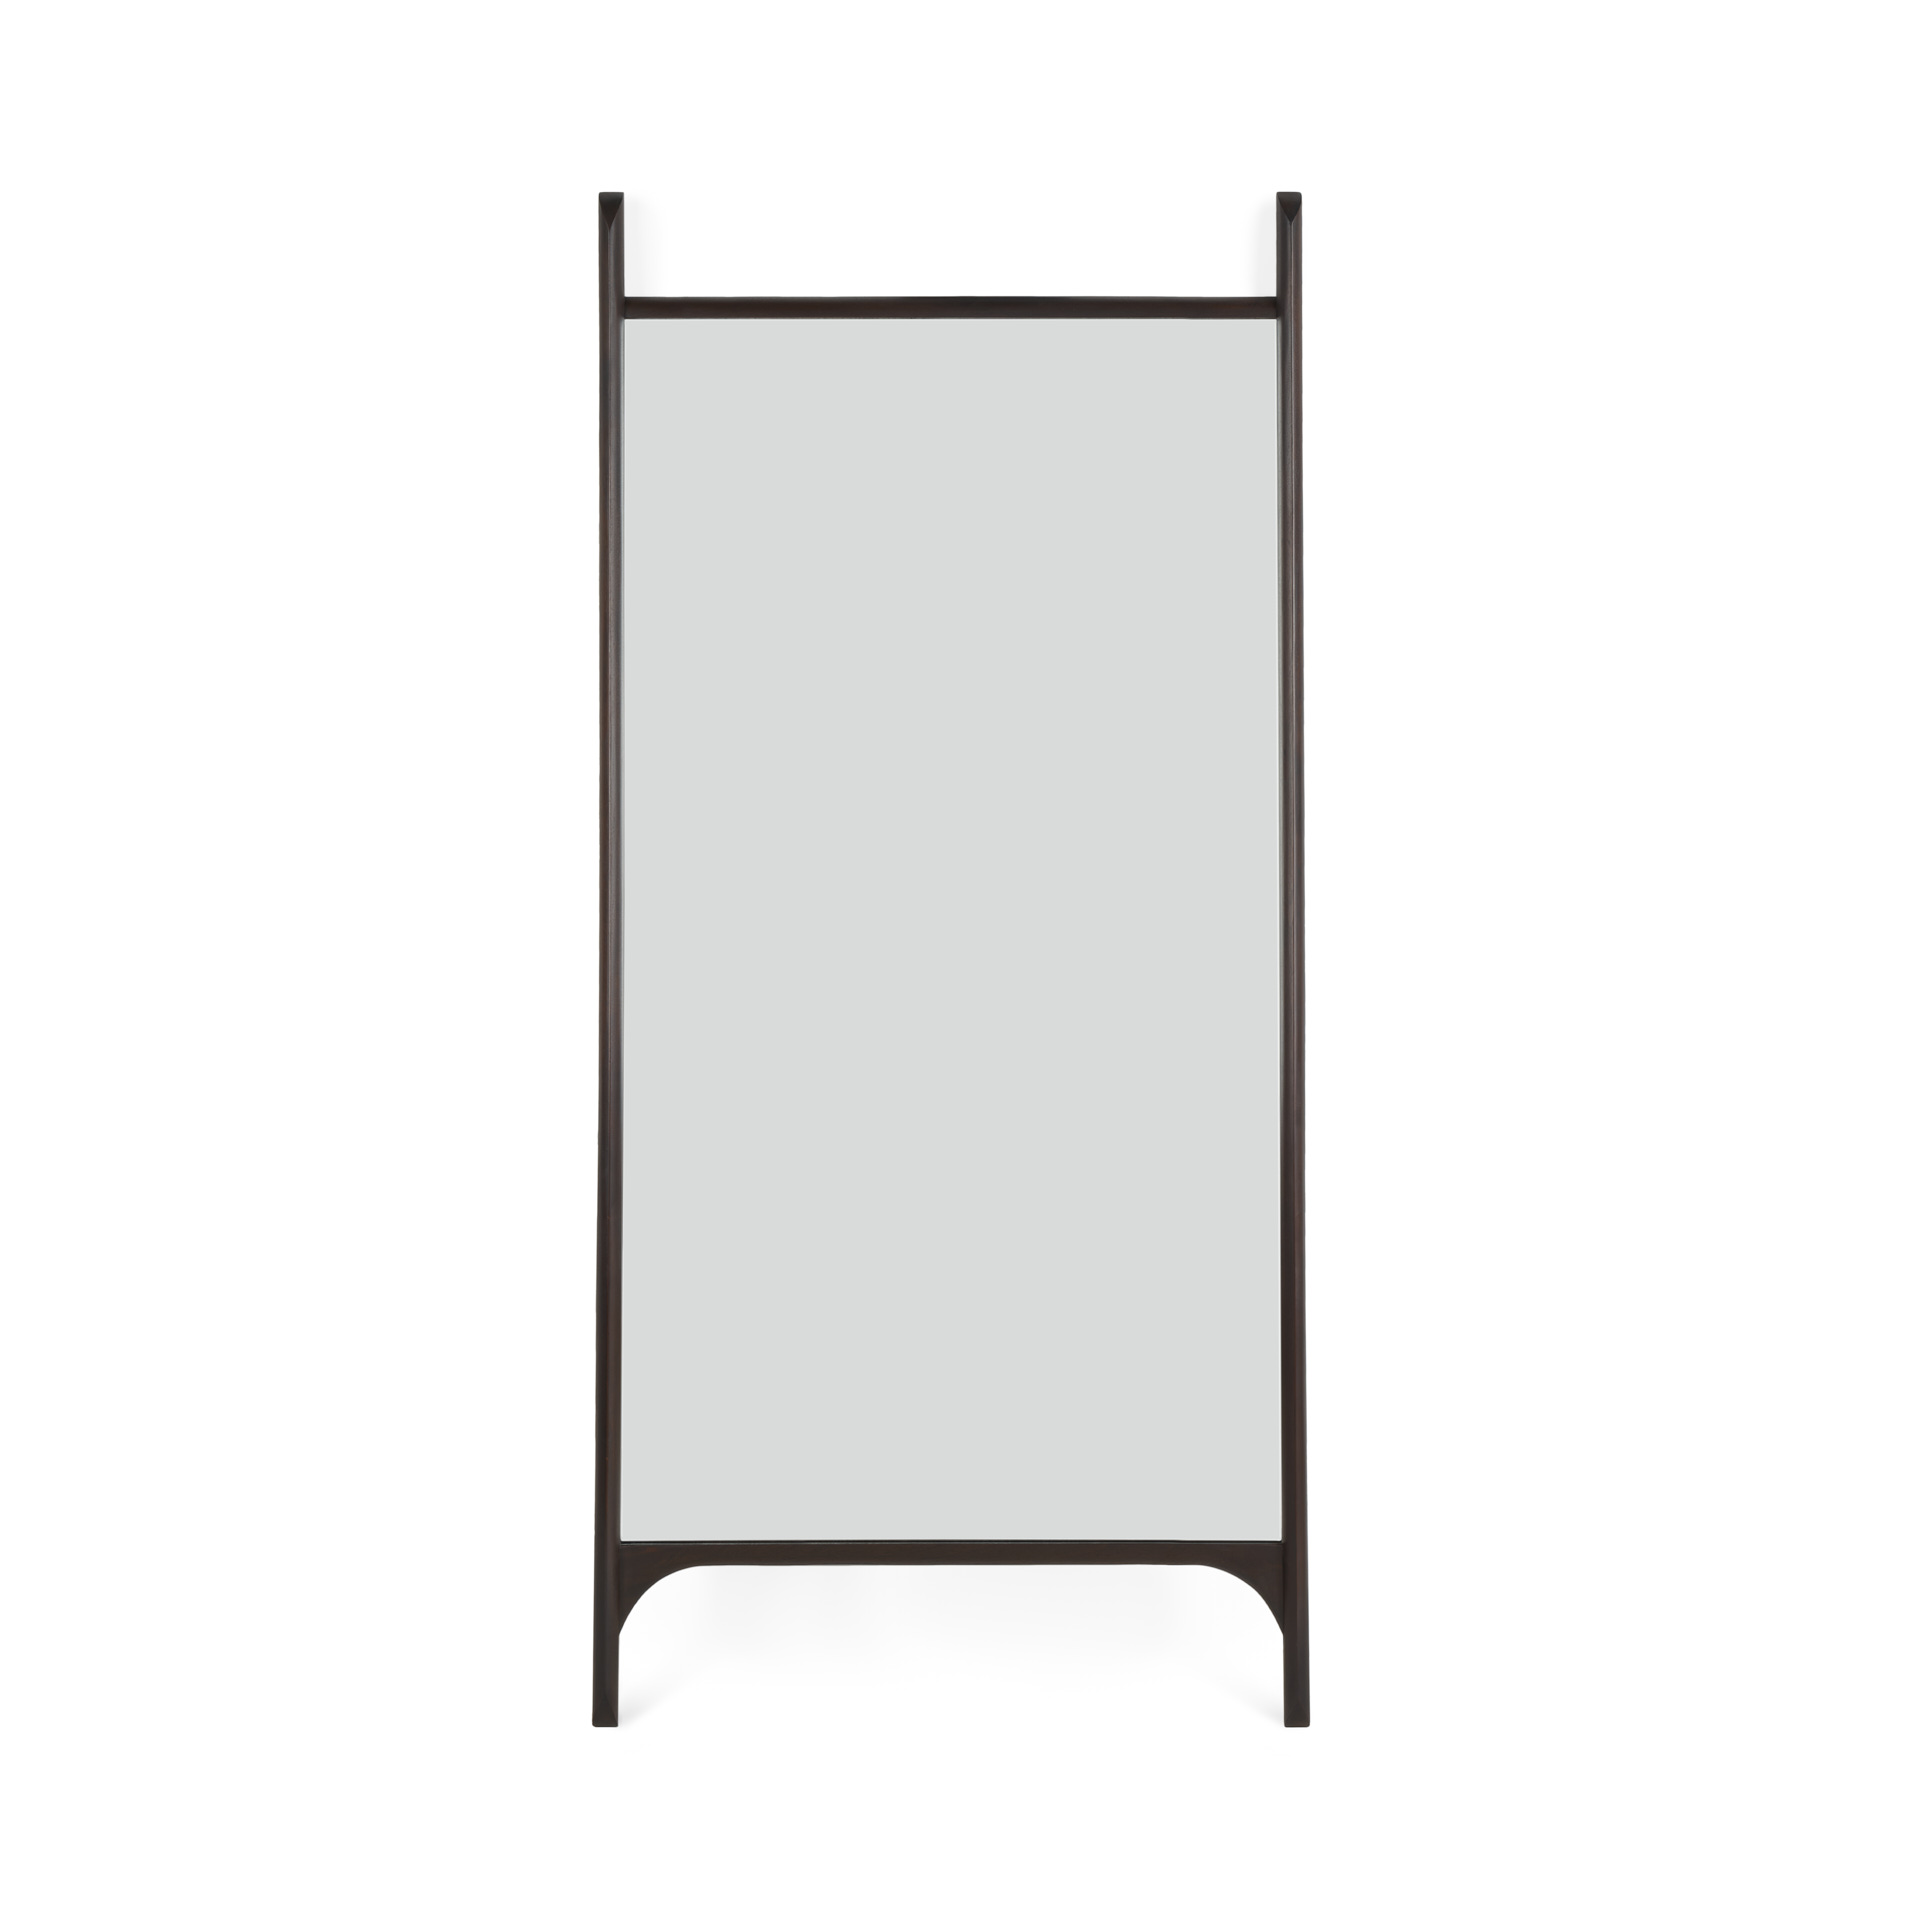 PI Standing mirror-mahogony-dark-brown-wood-Ethnicraft